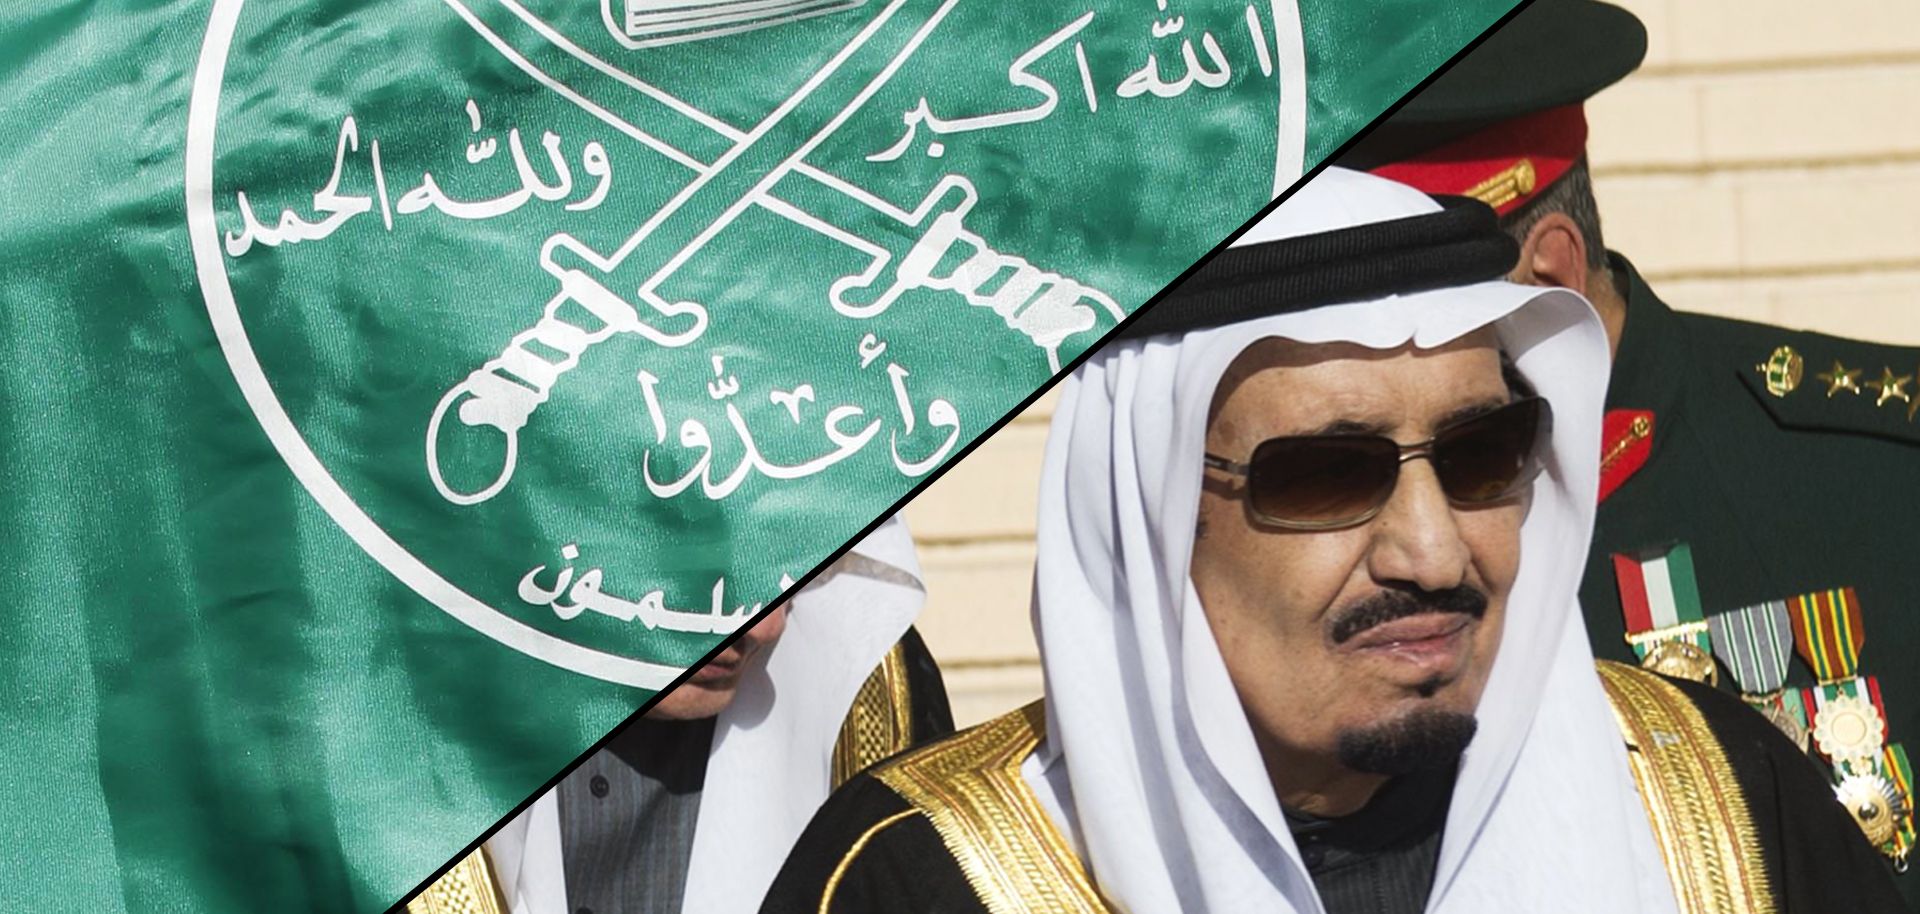 Saudi King Salman juxtaposed with the Muslim Brotherhood flag.